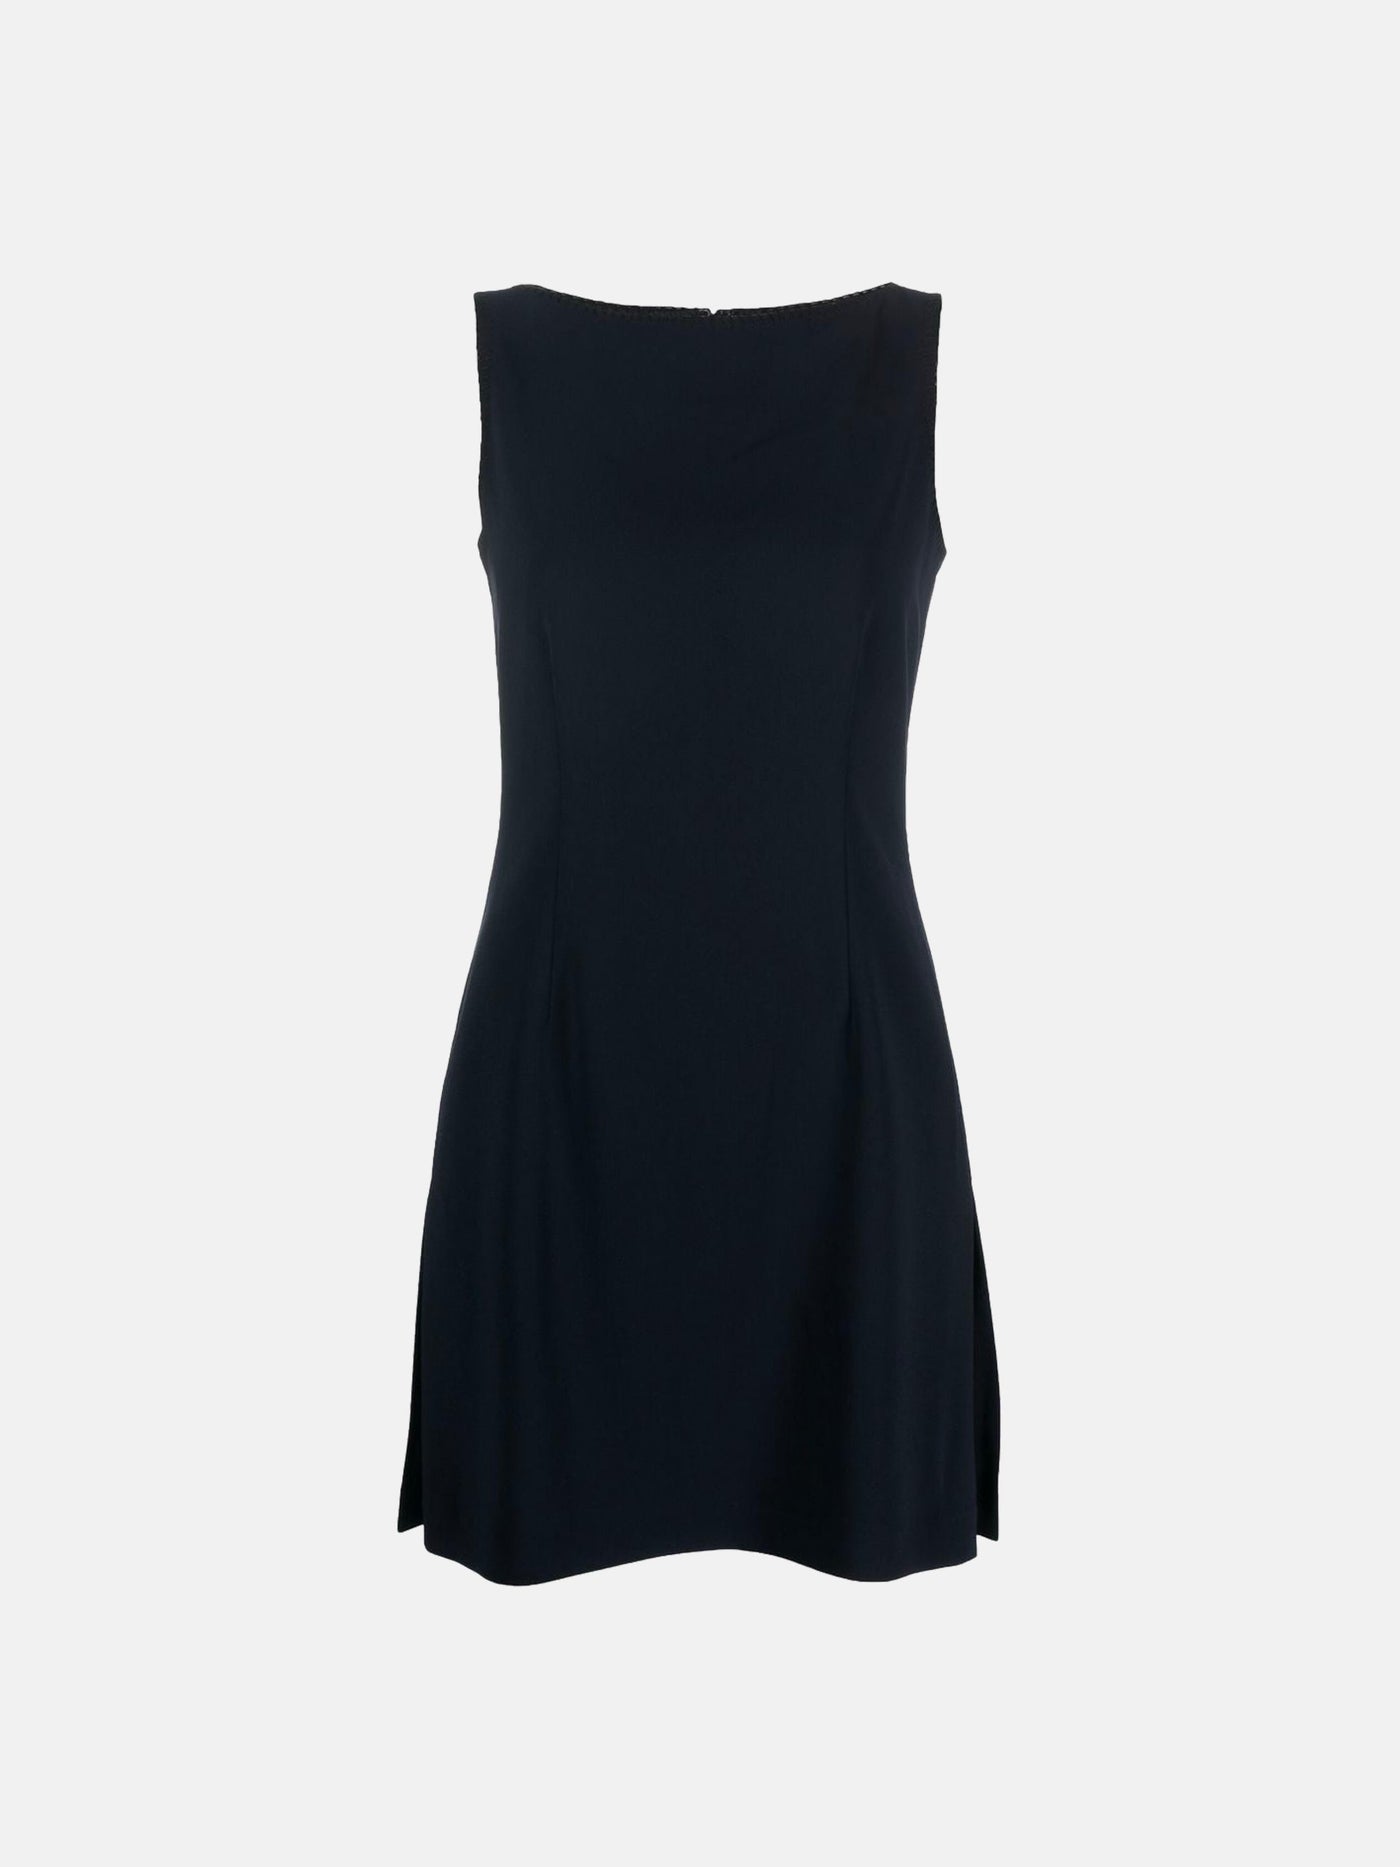 Sleeveless sheath dress, dark blue